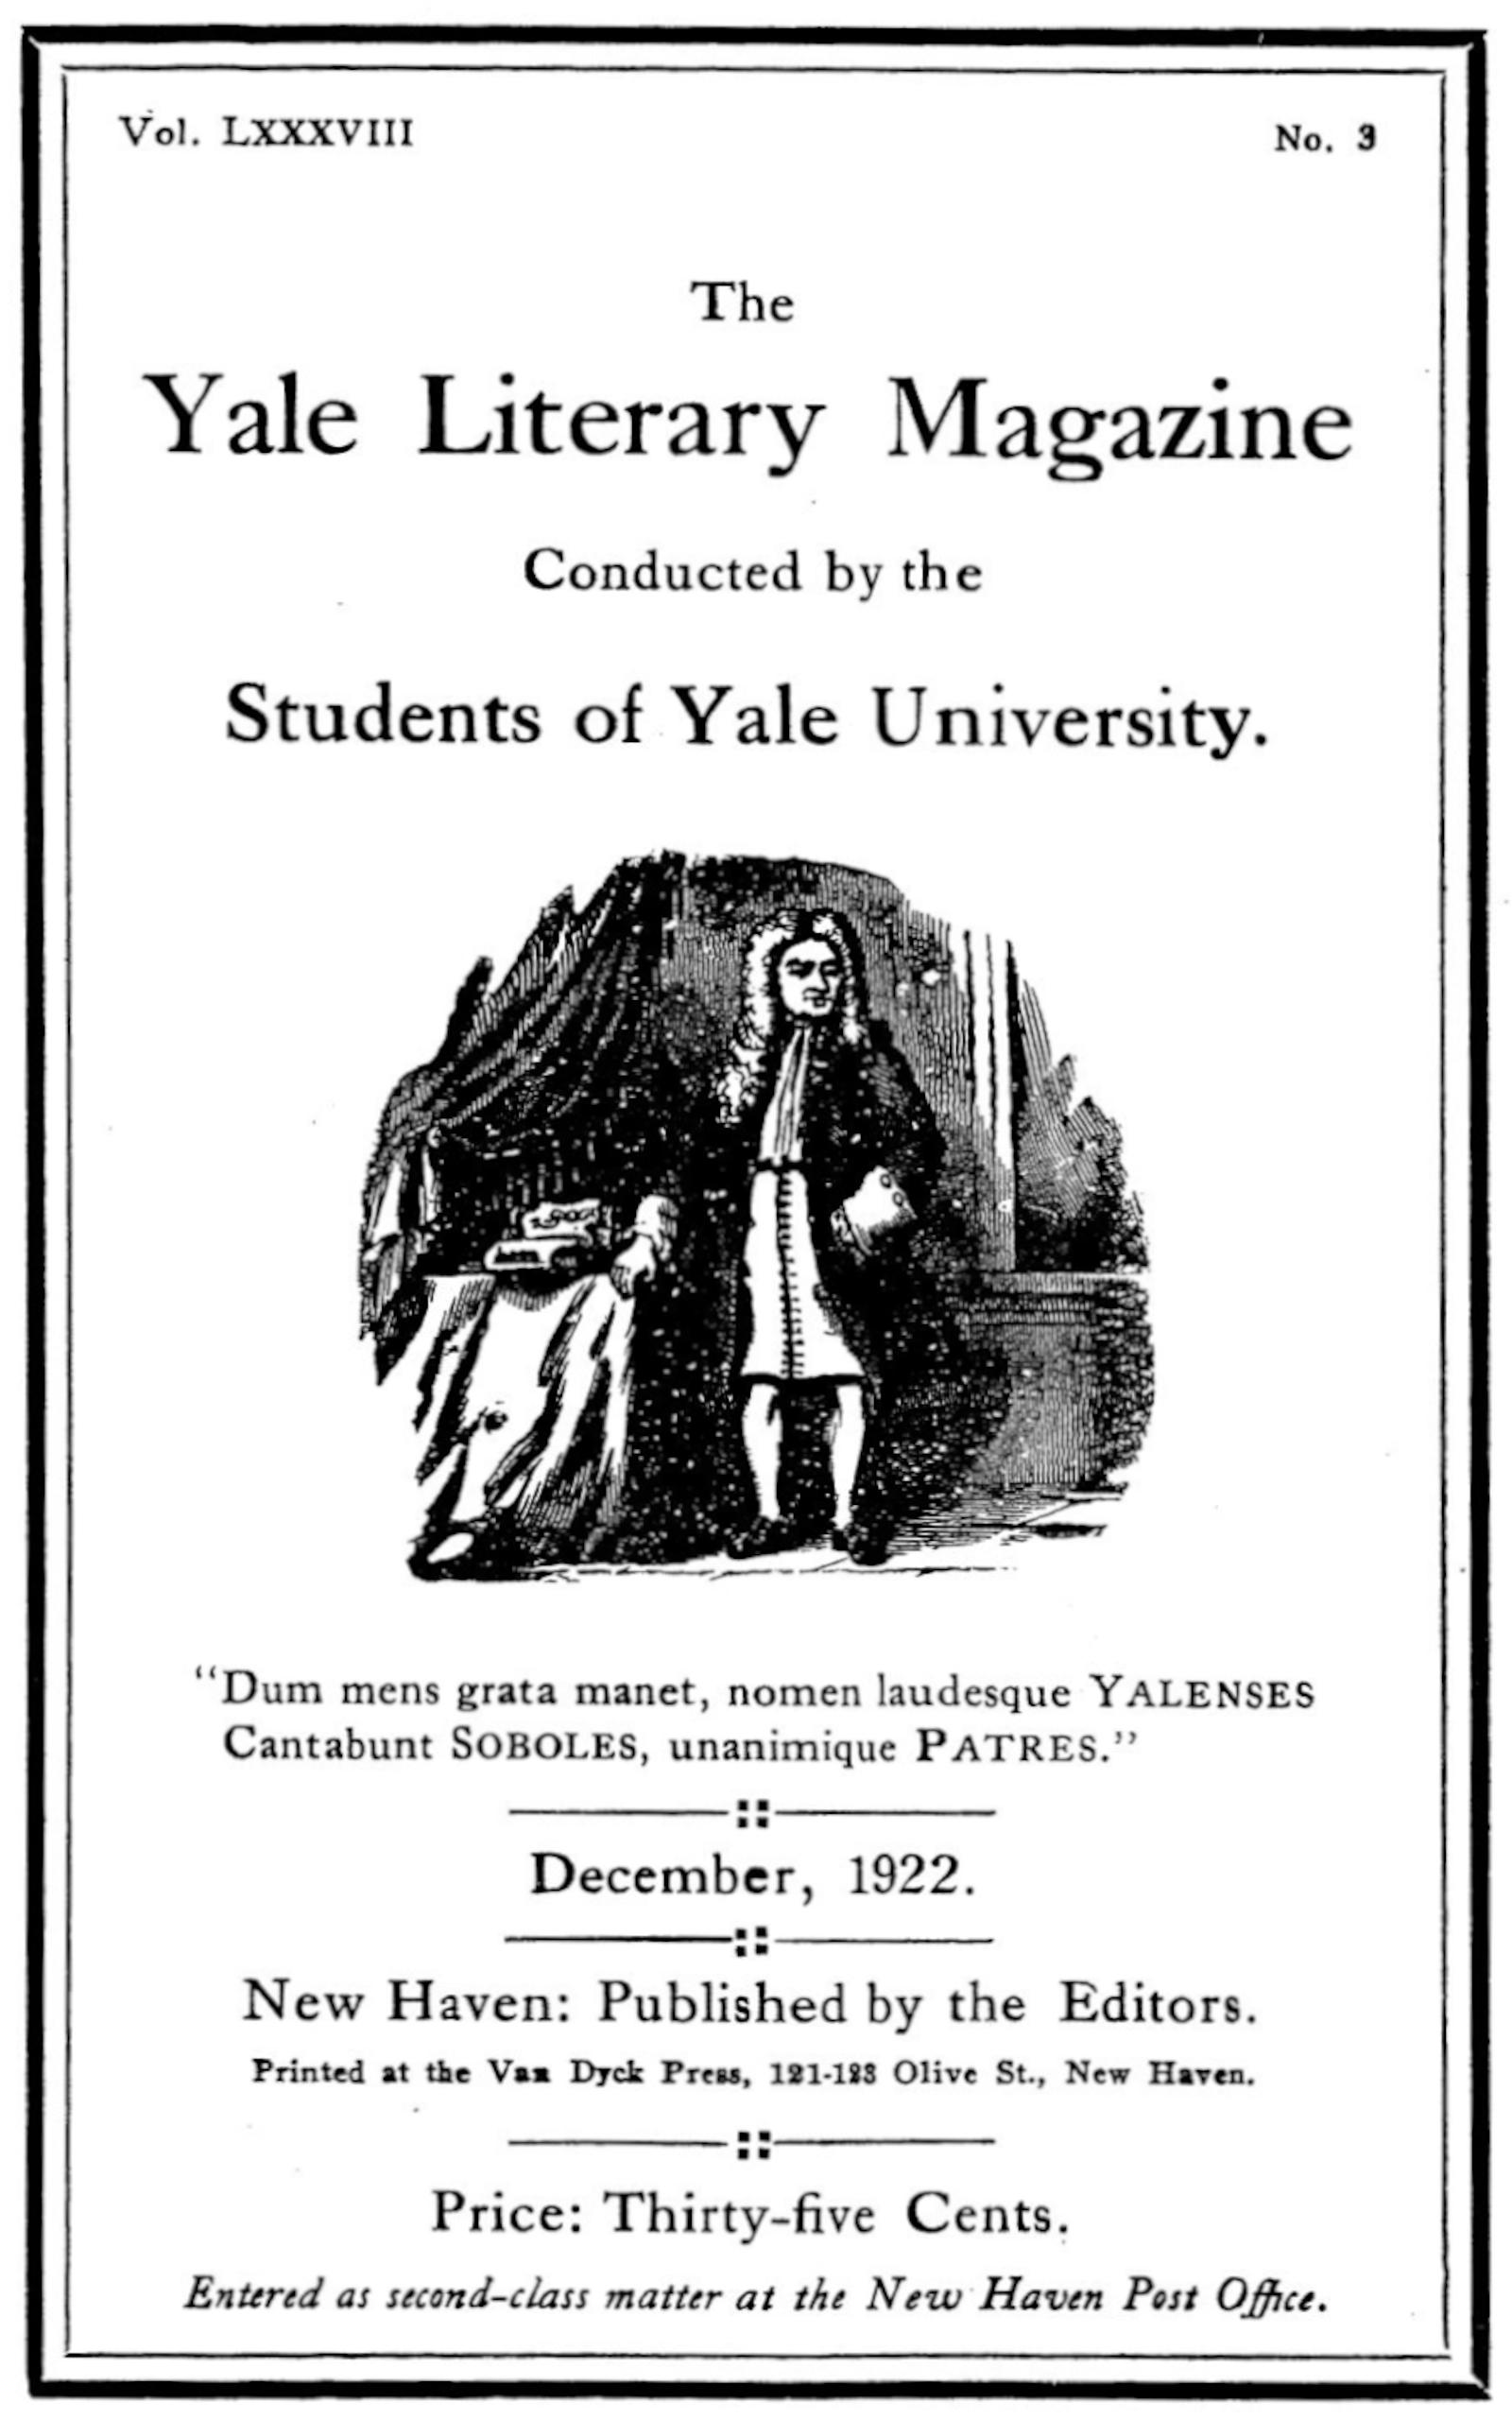 The Yale Literary Magazine (Vol. LXXXVIII, No. 3, December 1922)